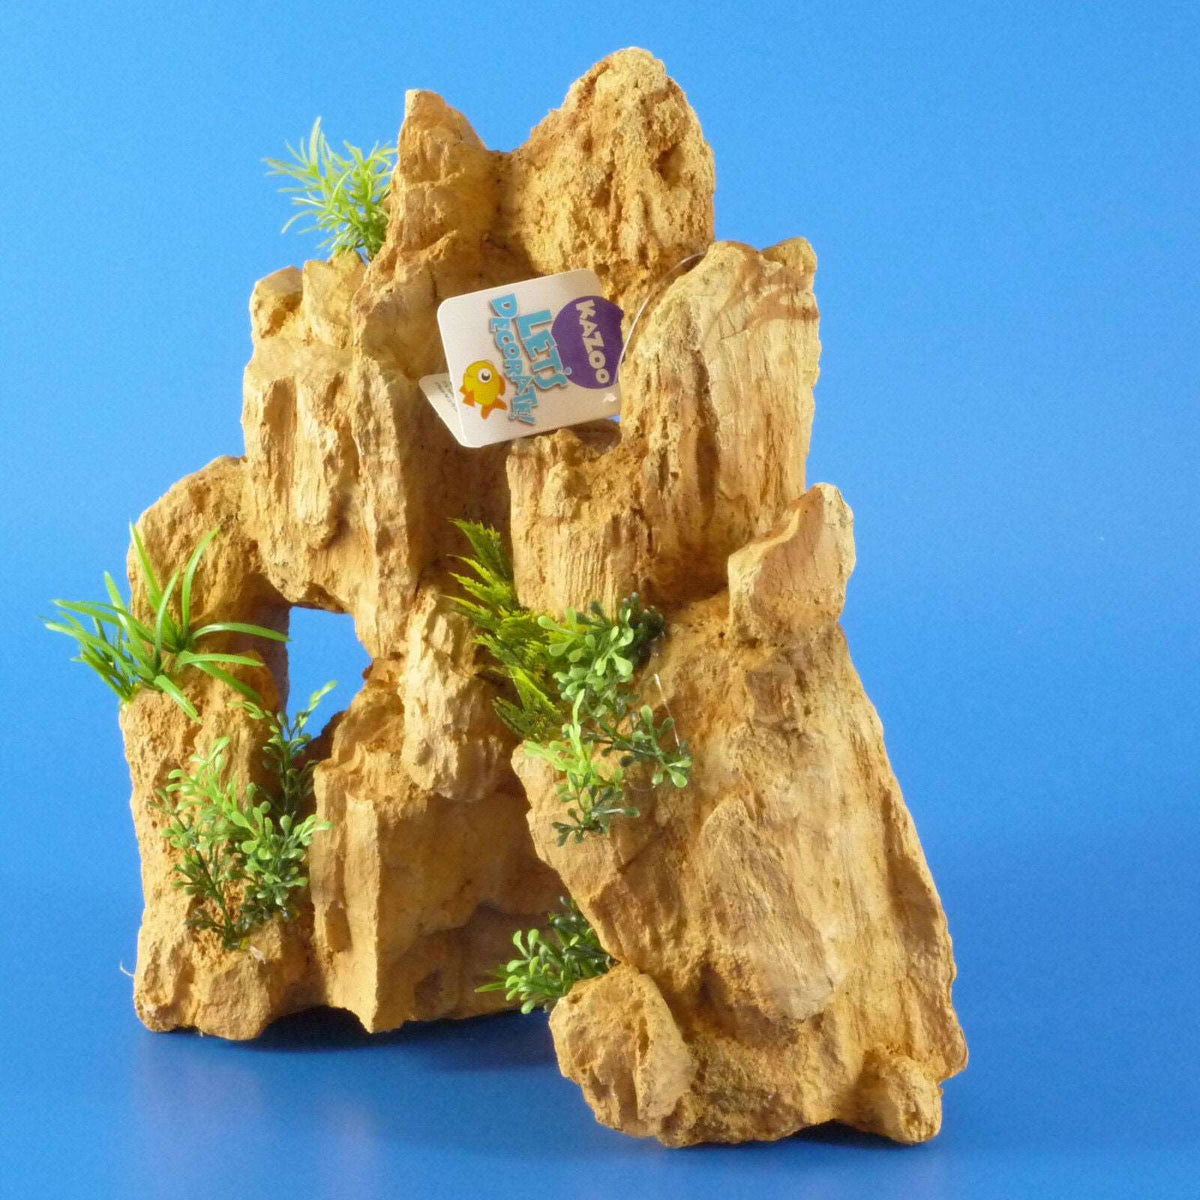 Kazoo Sandstone Rock with Plant Large